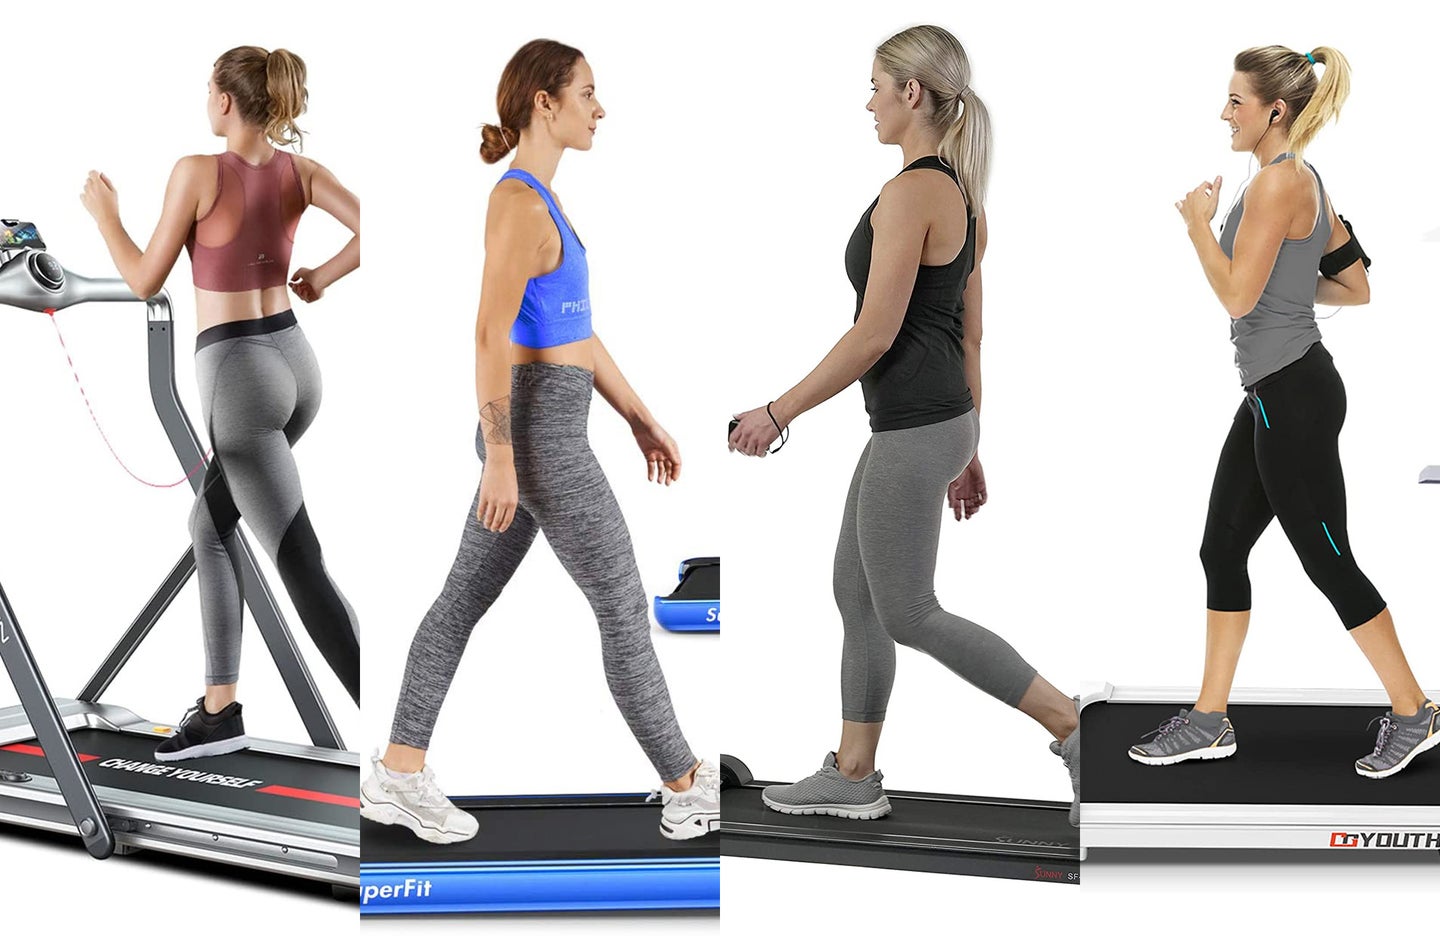 Women using the best treadmill desks on a white background